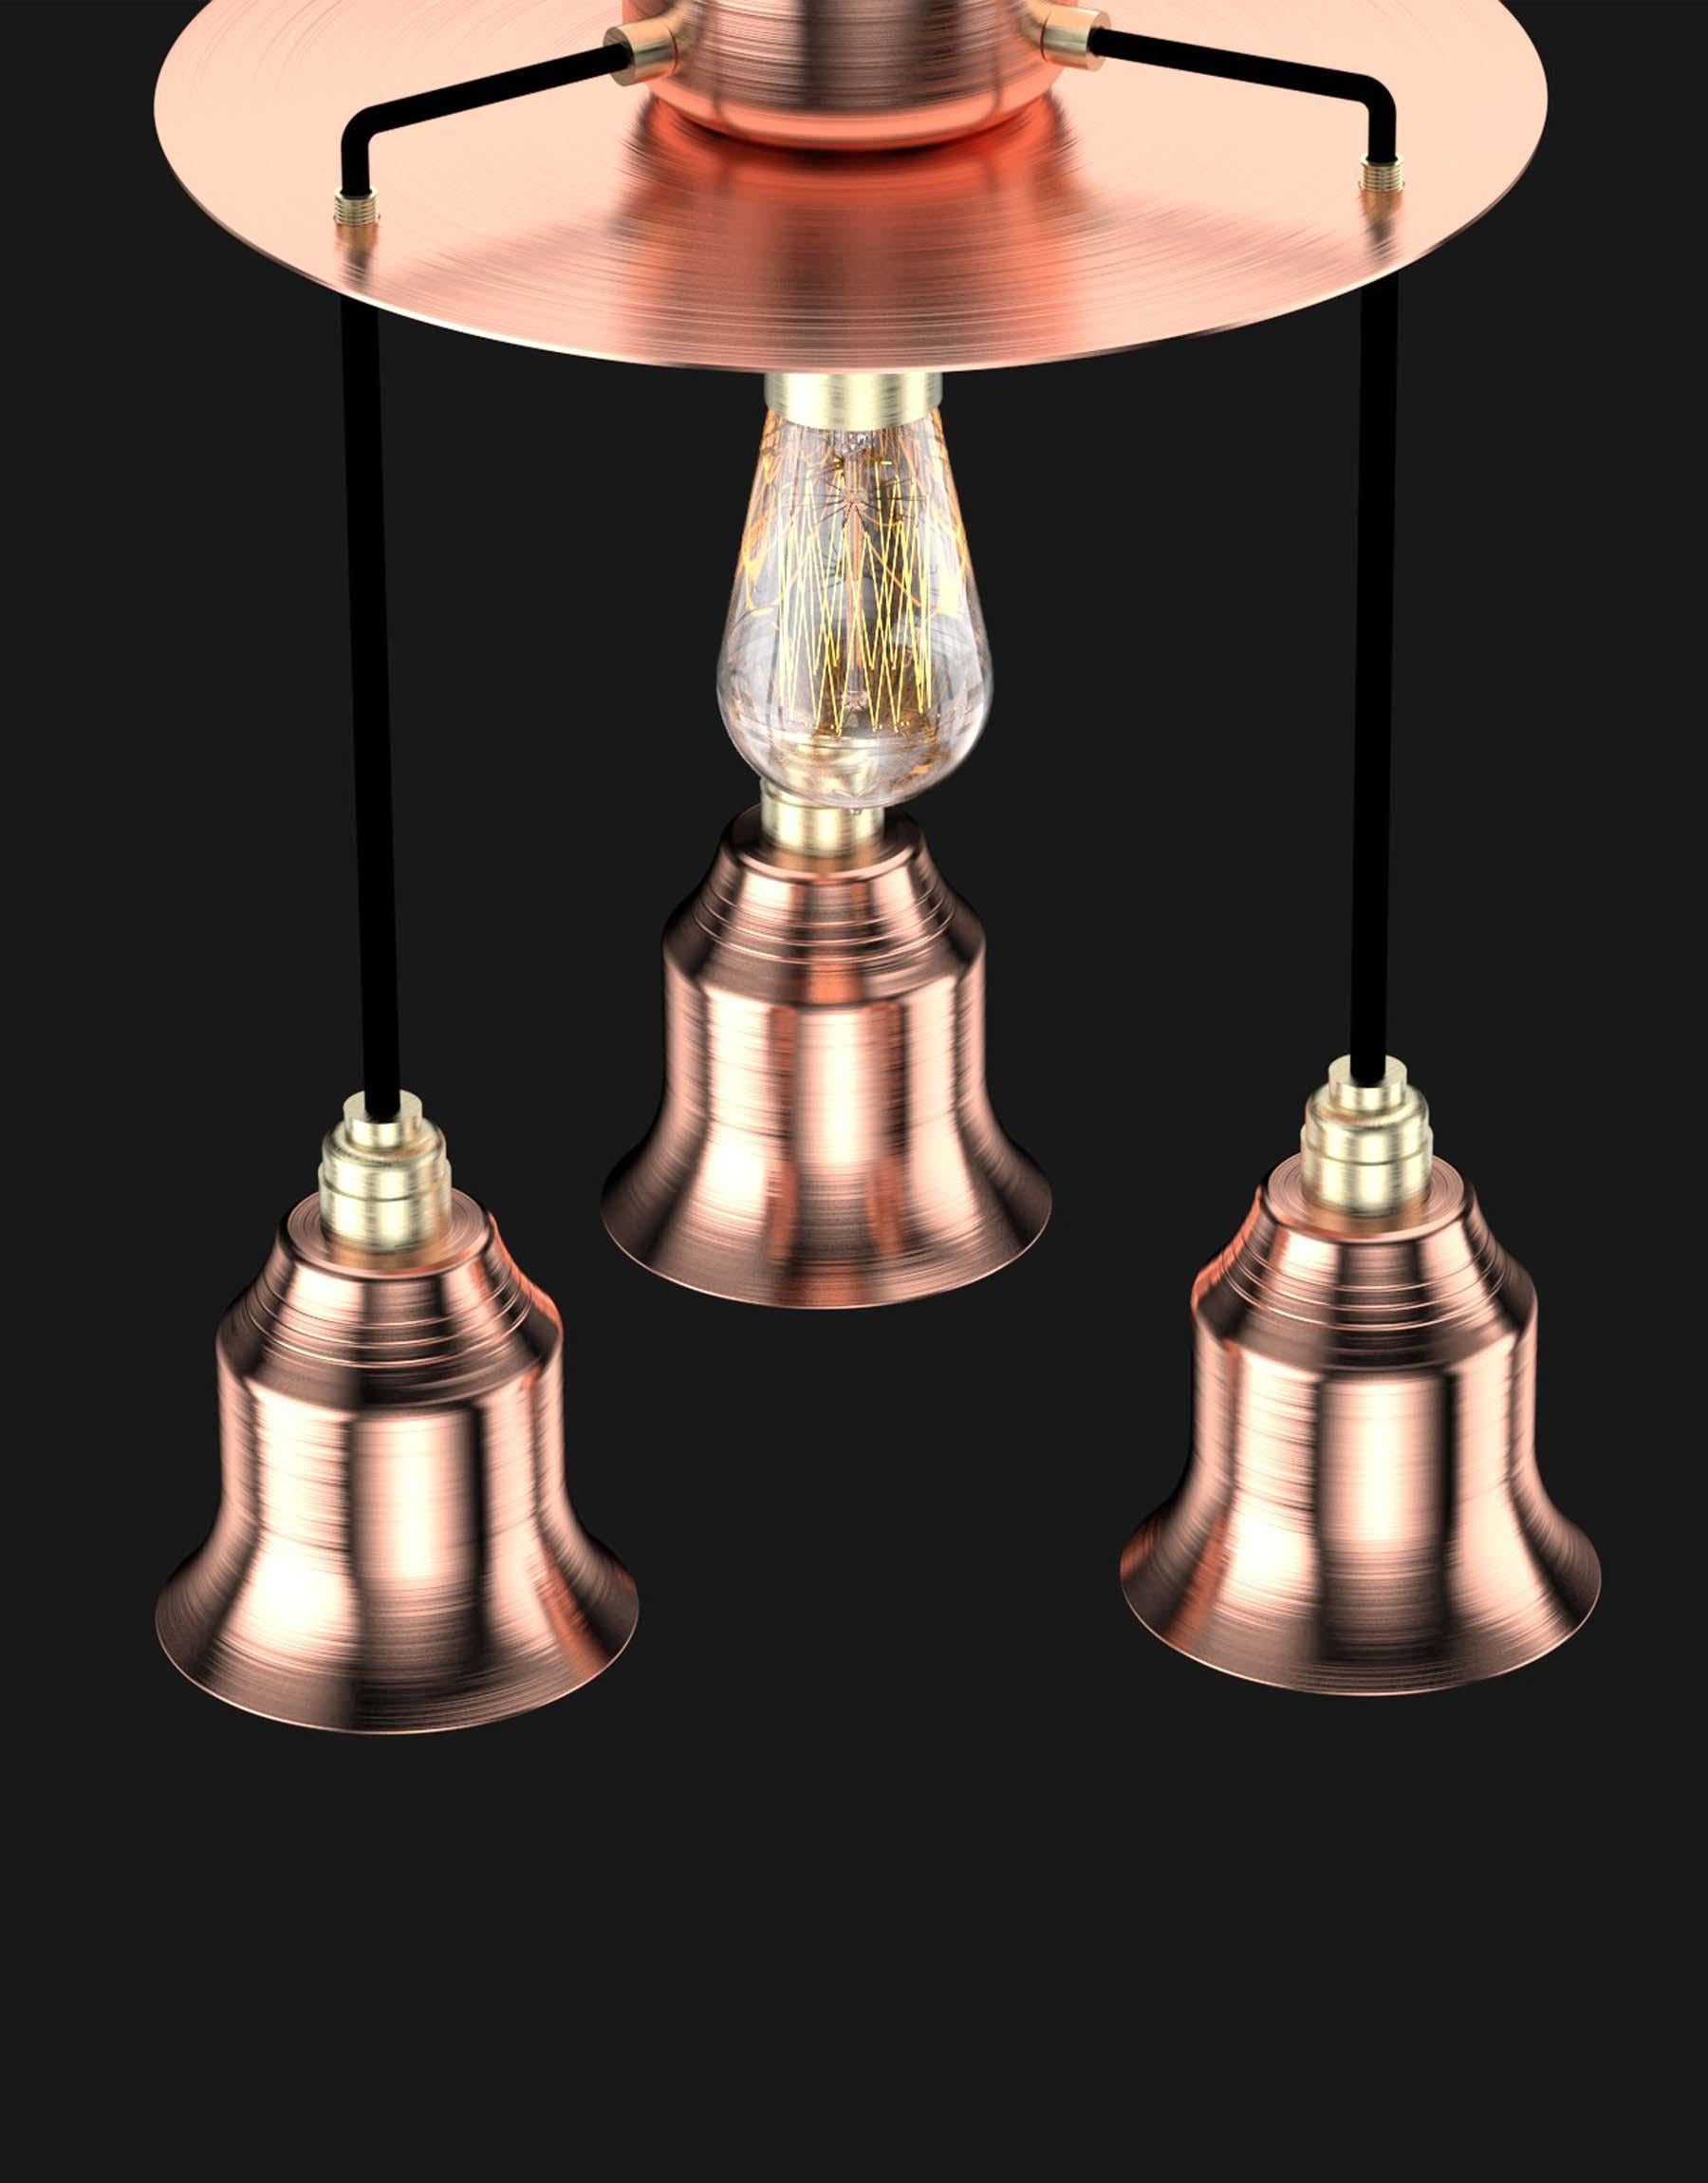 Brushed Edimate Genuine Copper Ceiling Light, Handmade in France Version 1 For Sale